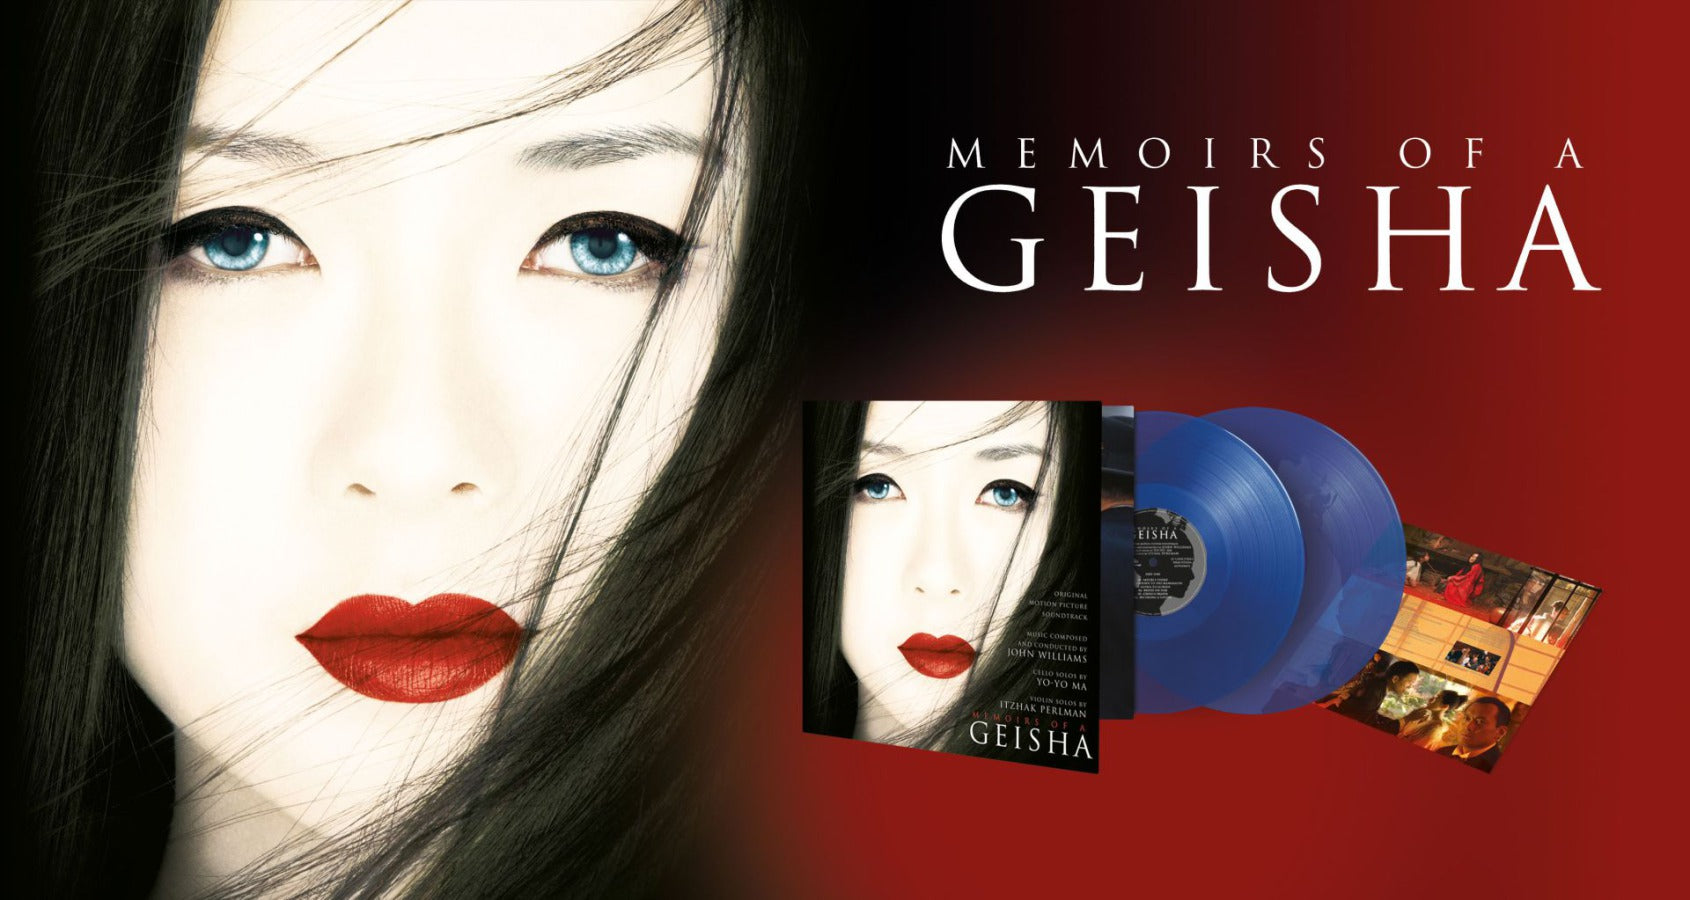 JOHN WILLIAMS FEAT. YO-YO MA - Memoirs Of A Geisha (2023 Reissue w/ Geisha Etching) - 2LP - Deluxe Gatefold 180g Translucent Blue Vinyl